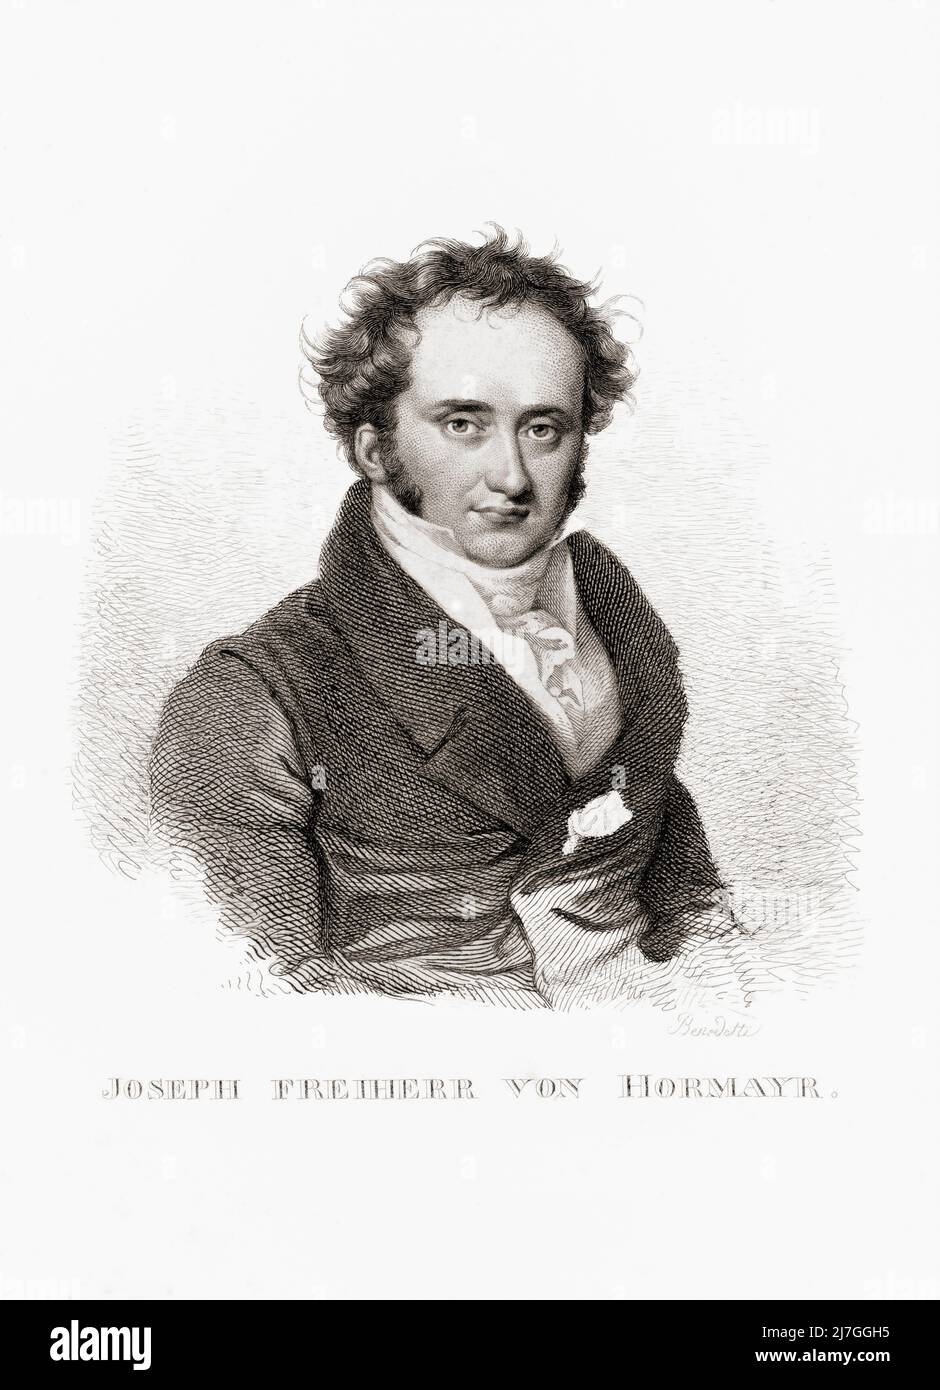 Joseph Hormayr, Baron zu Hortenburg, o Joseph Freiherr von Hormayr zu Hortenburg, 1781 - 1782. Storico e statista austriaco e tedesco. Foto Stock